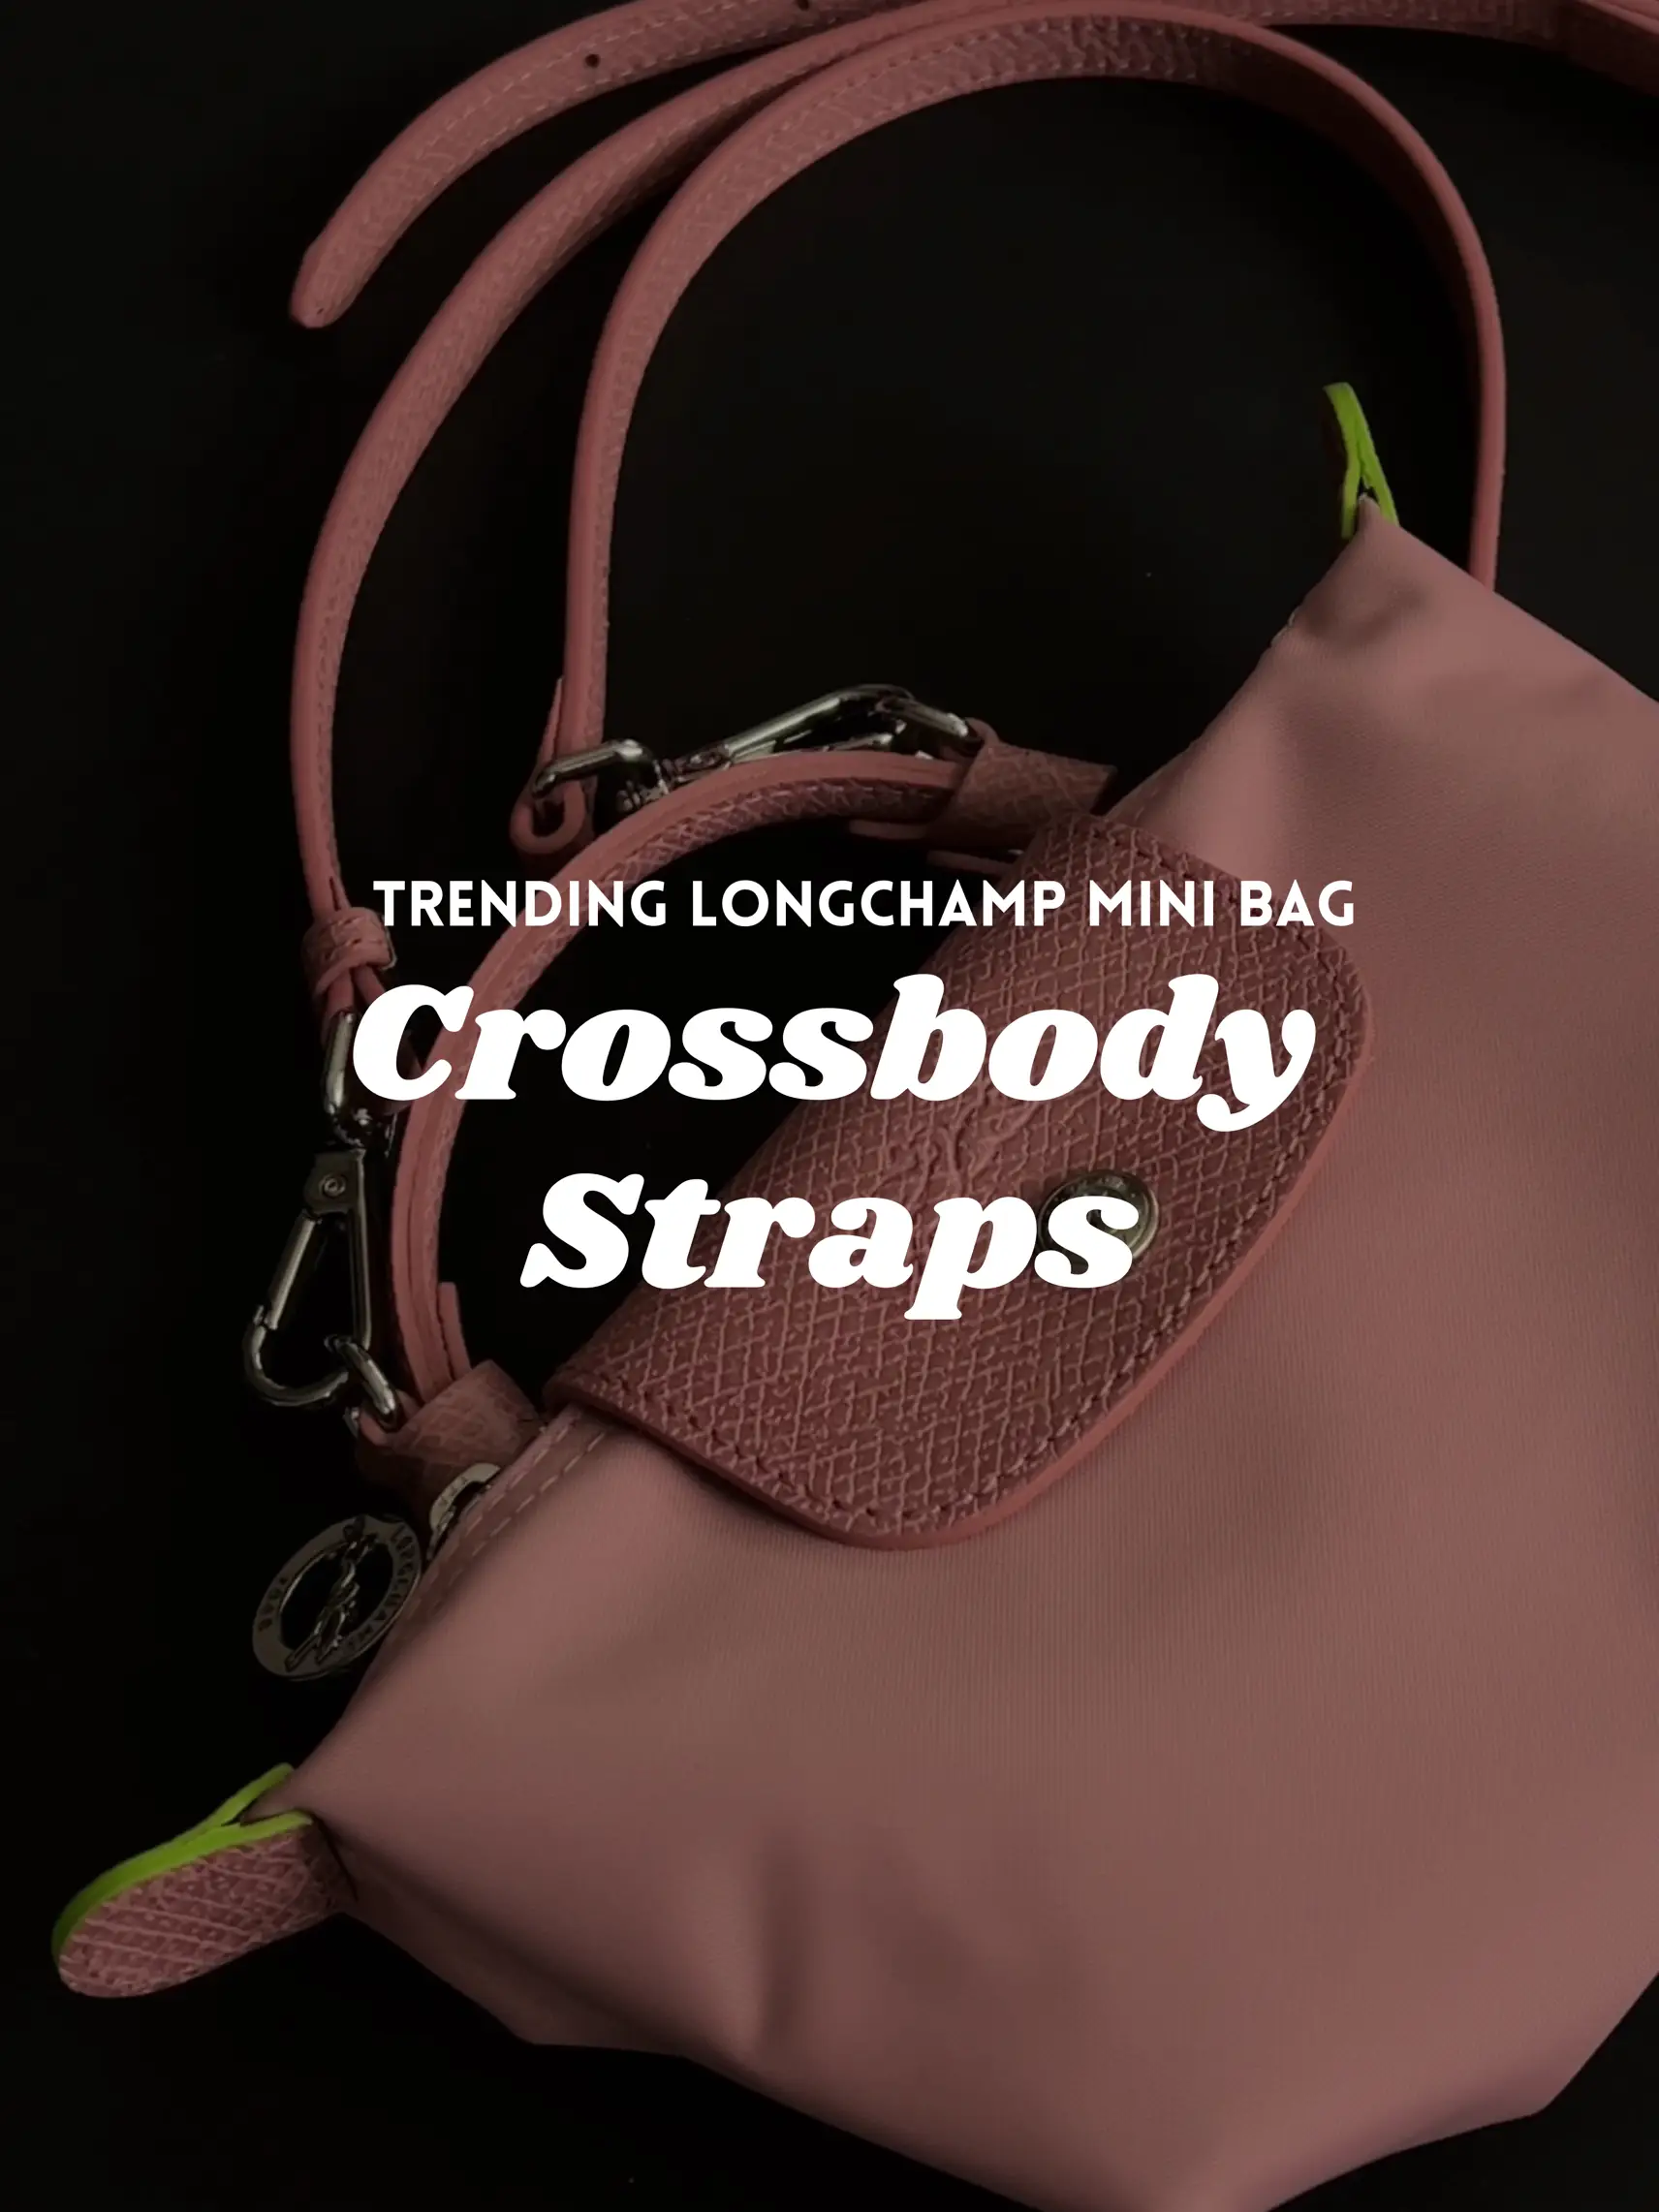 Converting Longchamp Makeup Pouch to Crossbody